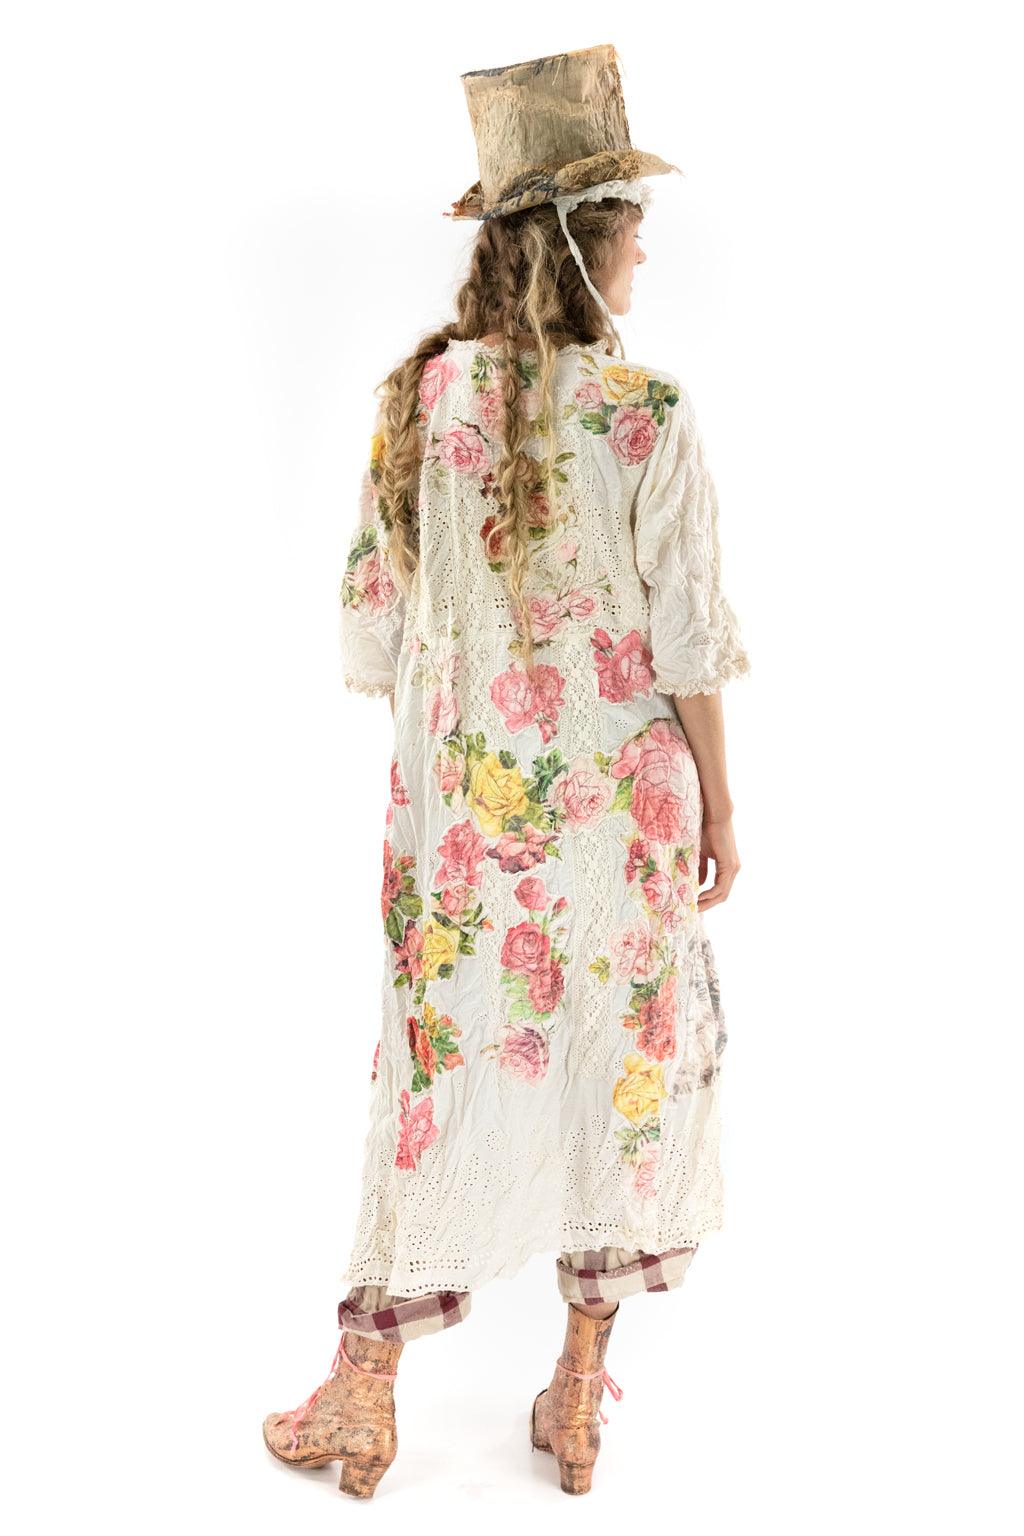 Eyelet Appliqué Coronado Dress - Magnolia Pearl Clothing